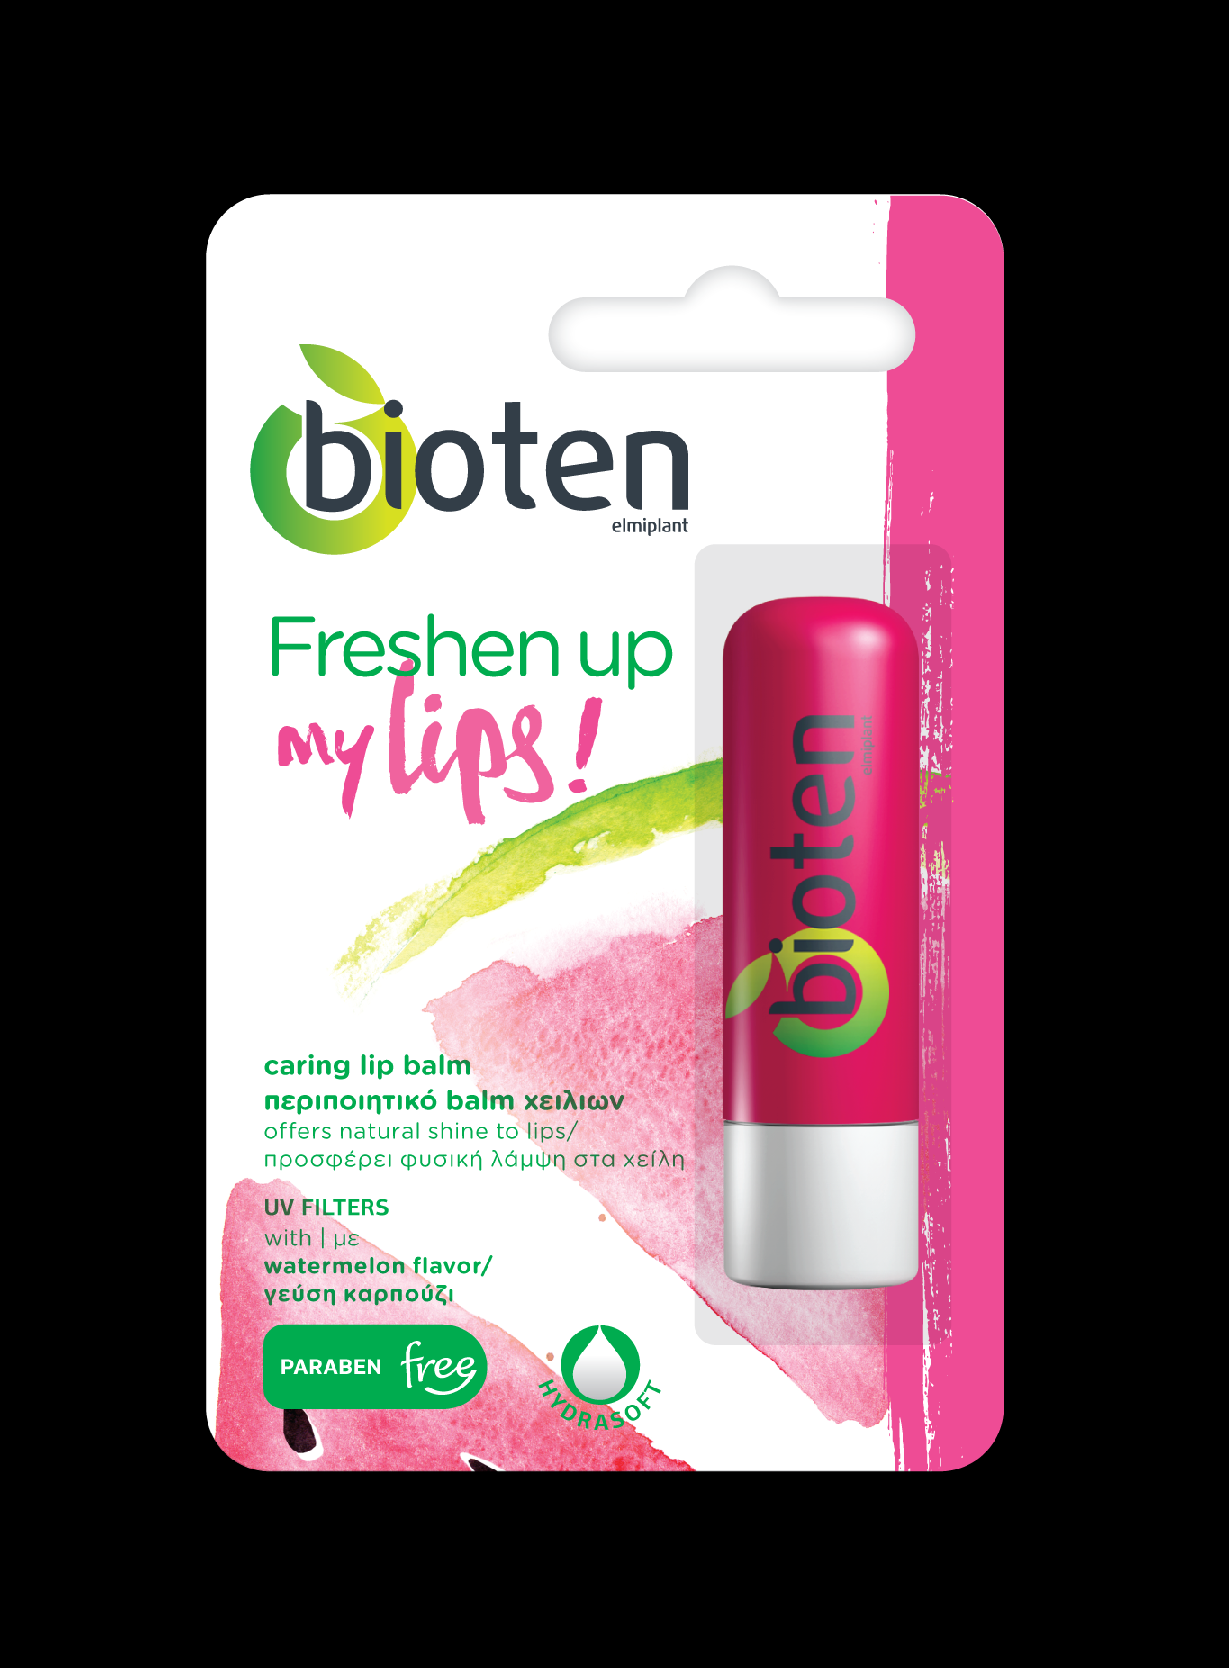 bioten Freshen up my lips